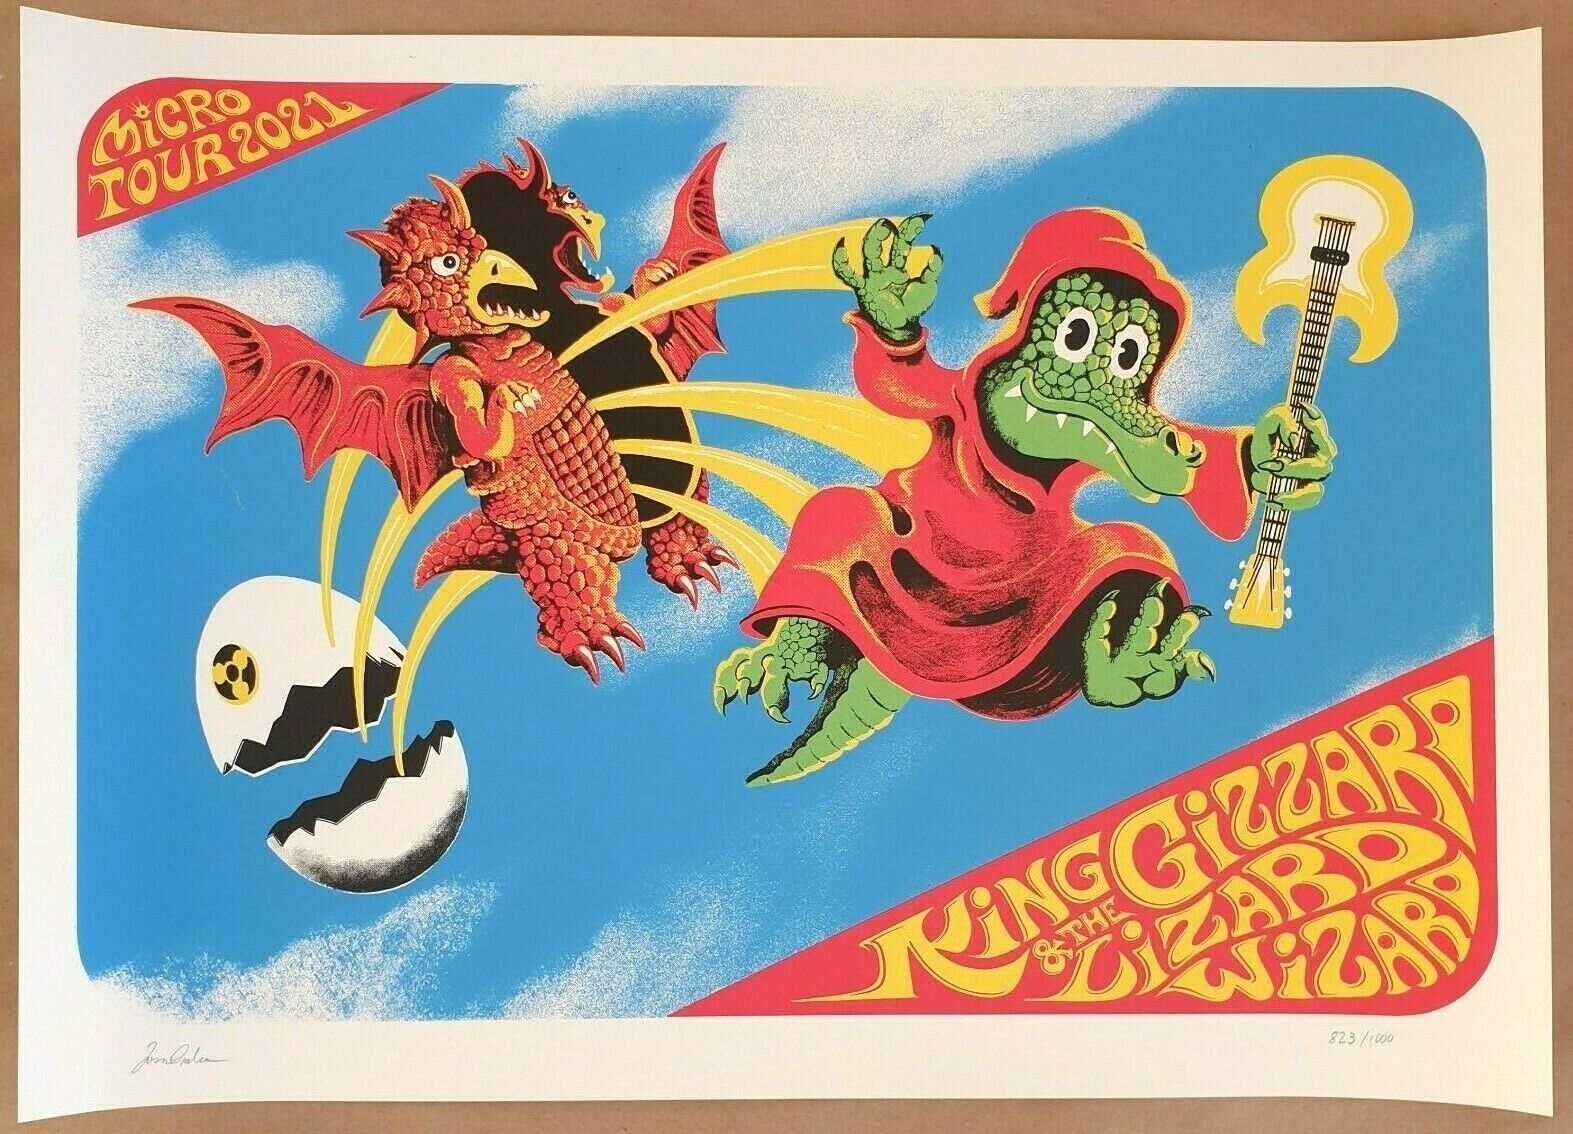 KING GIZZARD & THE LIZARD WIZARD - MICRO TOUR AUSTRALIA 2021 Official Gig Poster